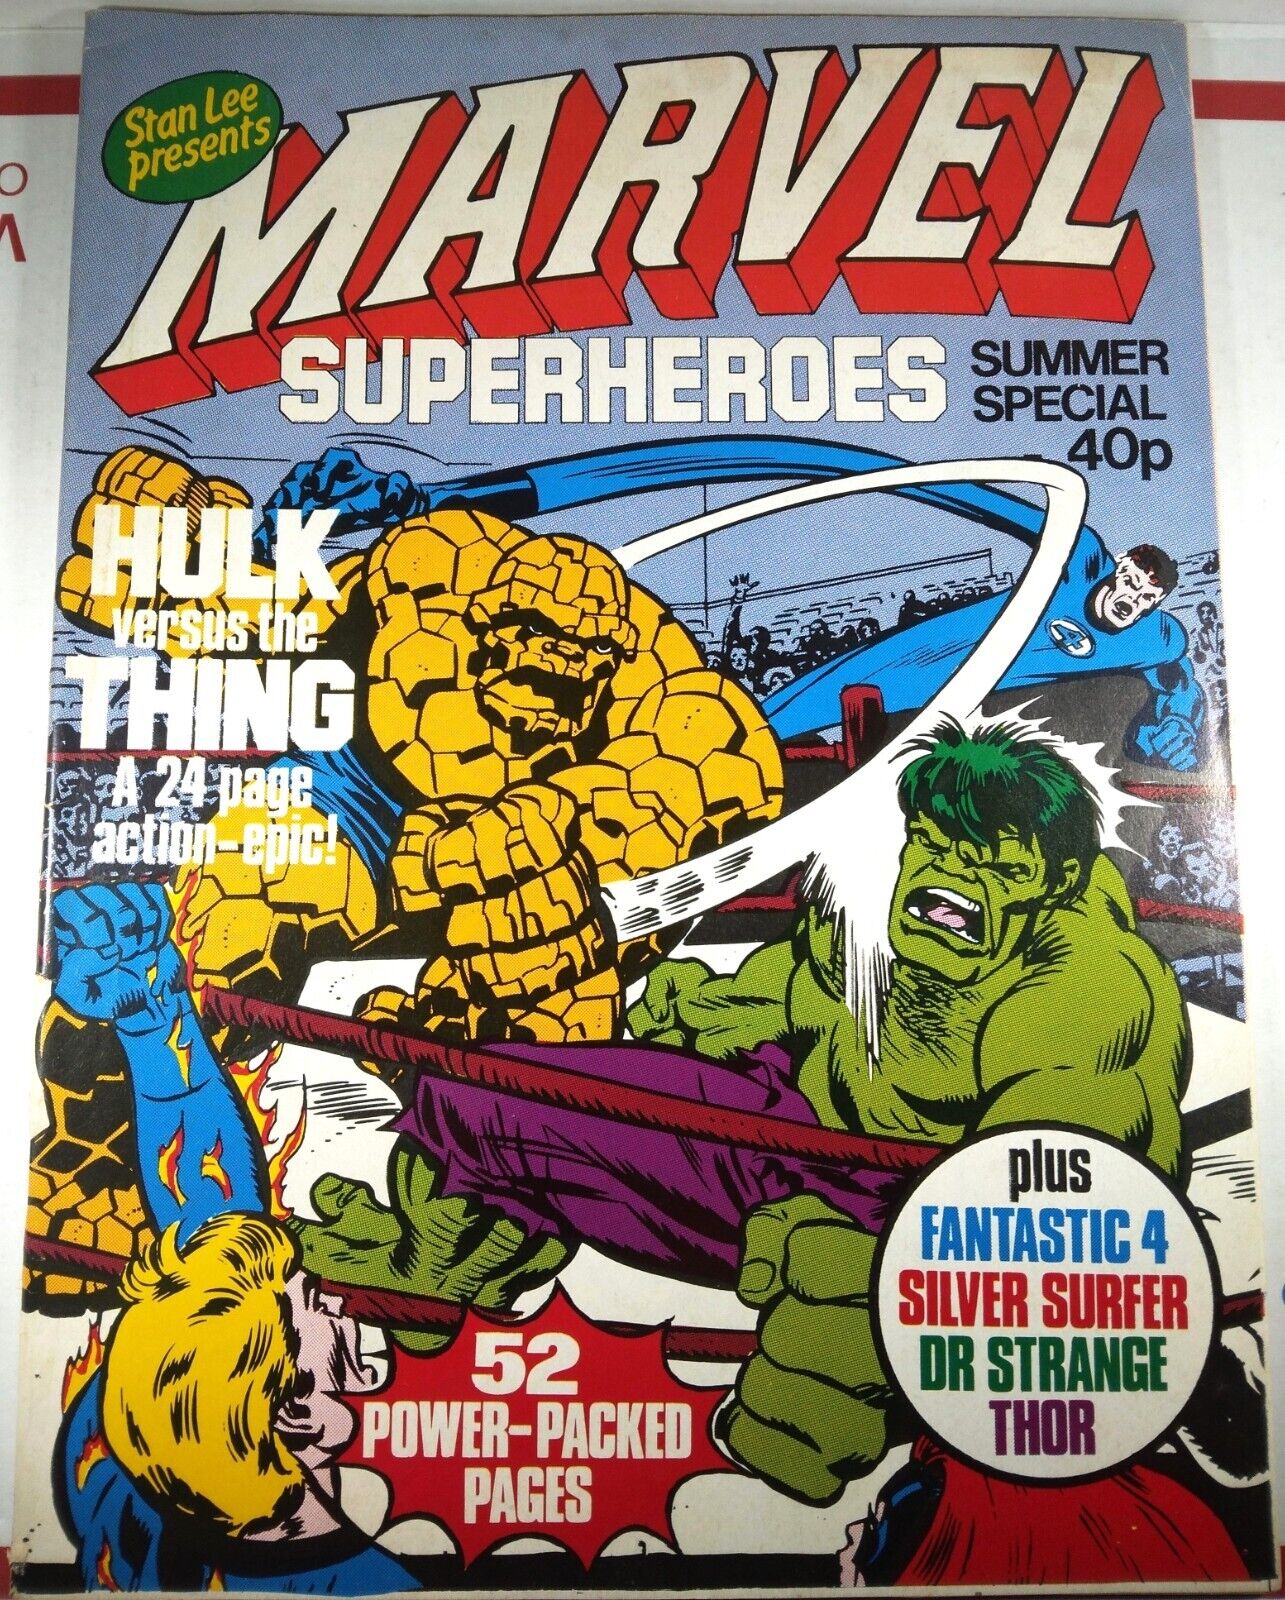 🟢💥 MARVEL SUPERHEROES SUMMER SPECIAL #1 UK 1979 INCREDIBLE HULK VS THING THOR